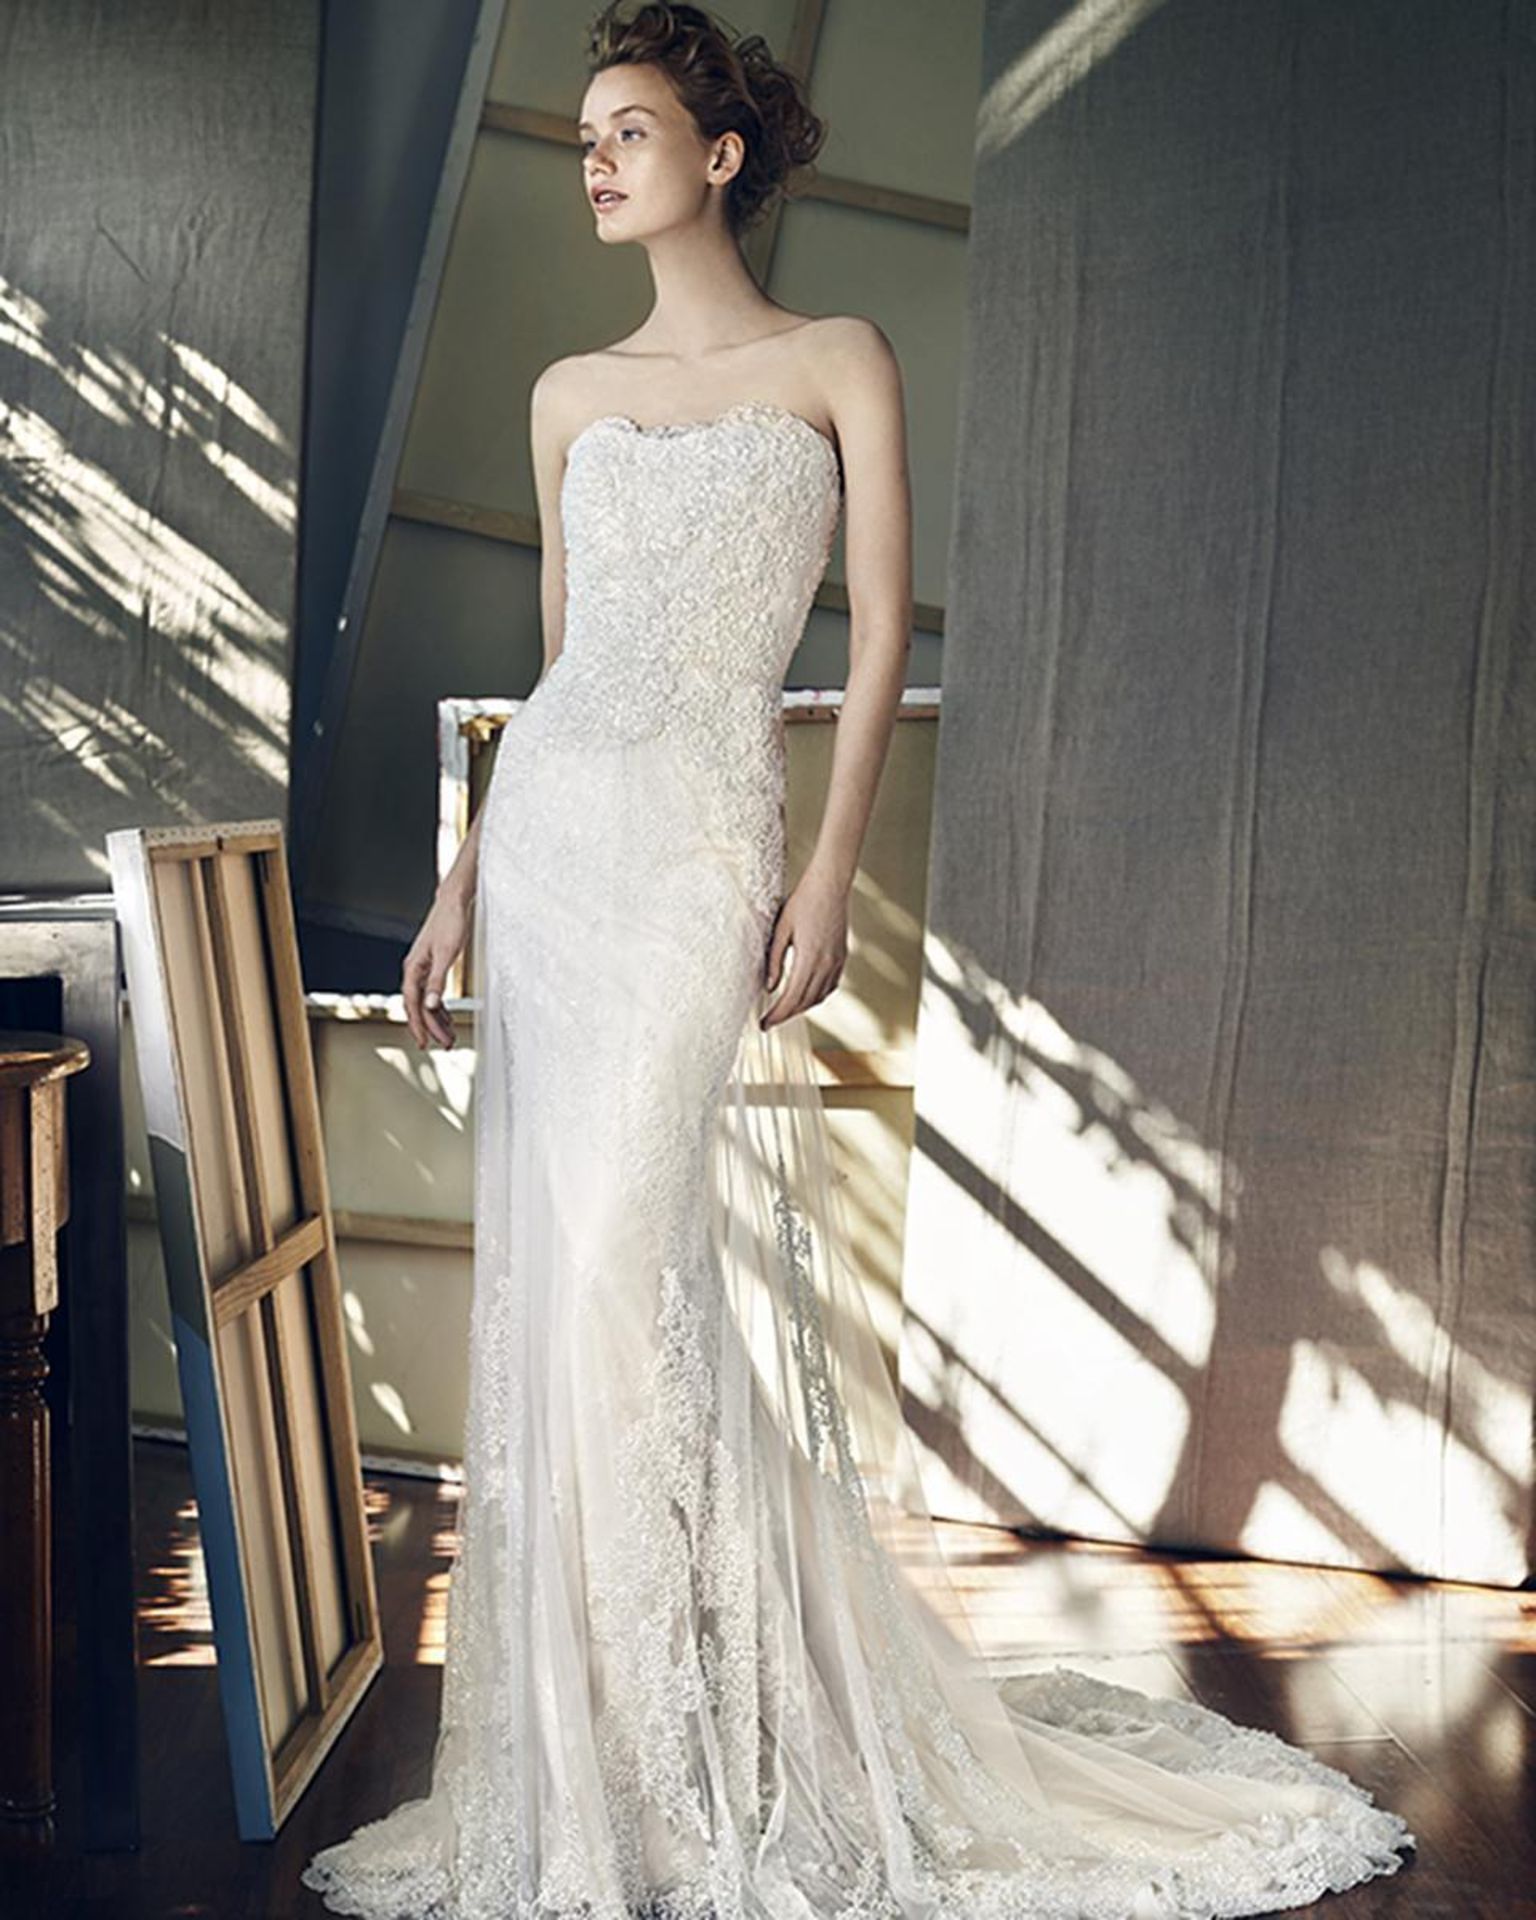 1 x LUSAN MANDONGUS Elegant Strapless Lace & Chiffon Fishtail Designer Wedding Dress RRP £1,950 UK12